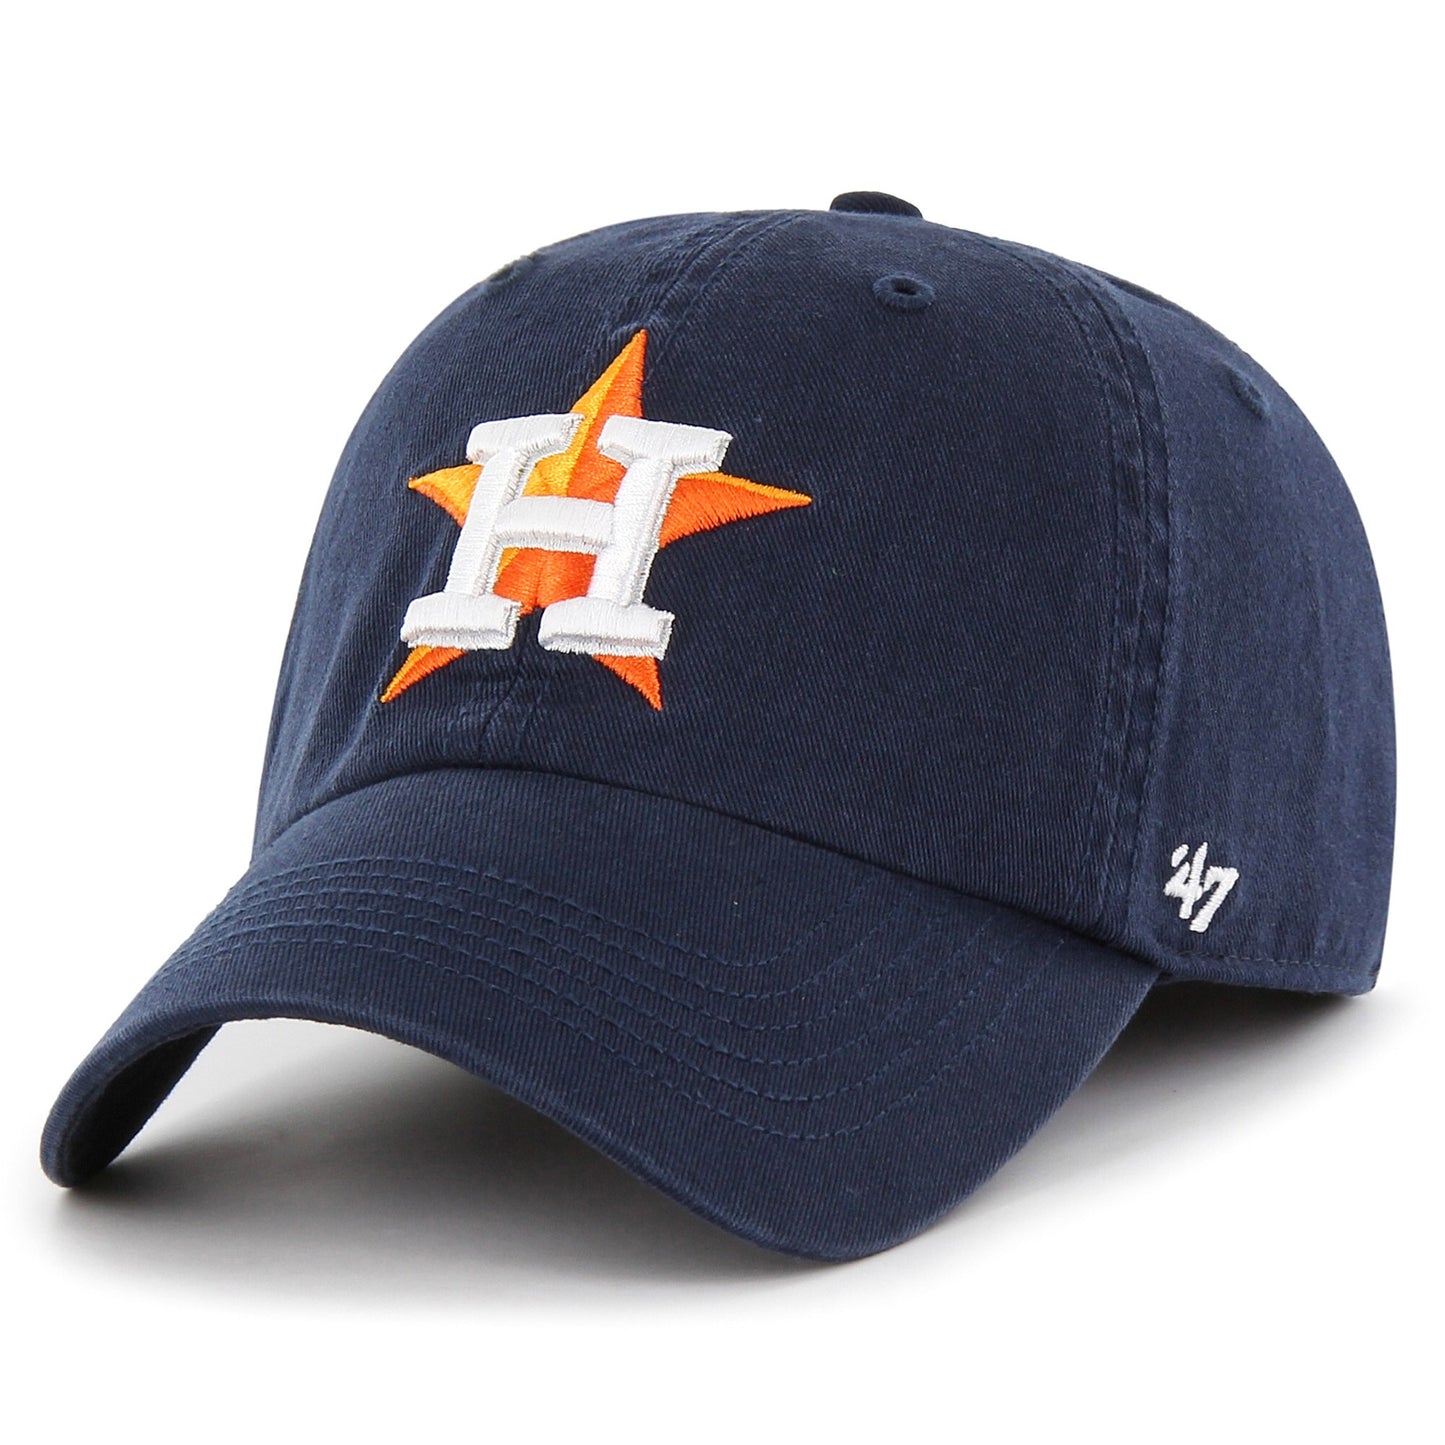 Houston Astros '47 Franchise Logo Fitted Hat - Navy